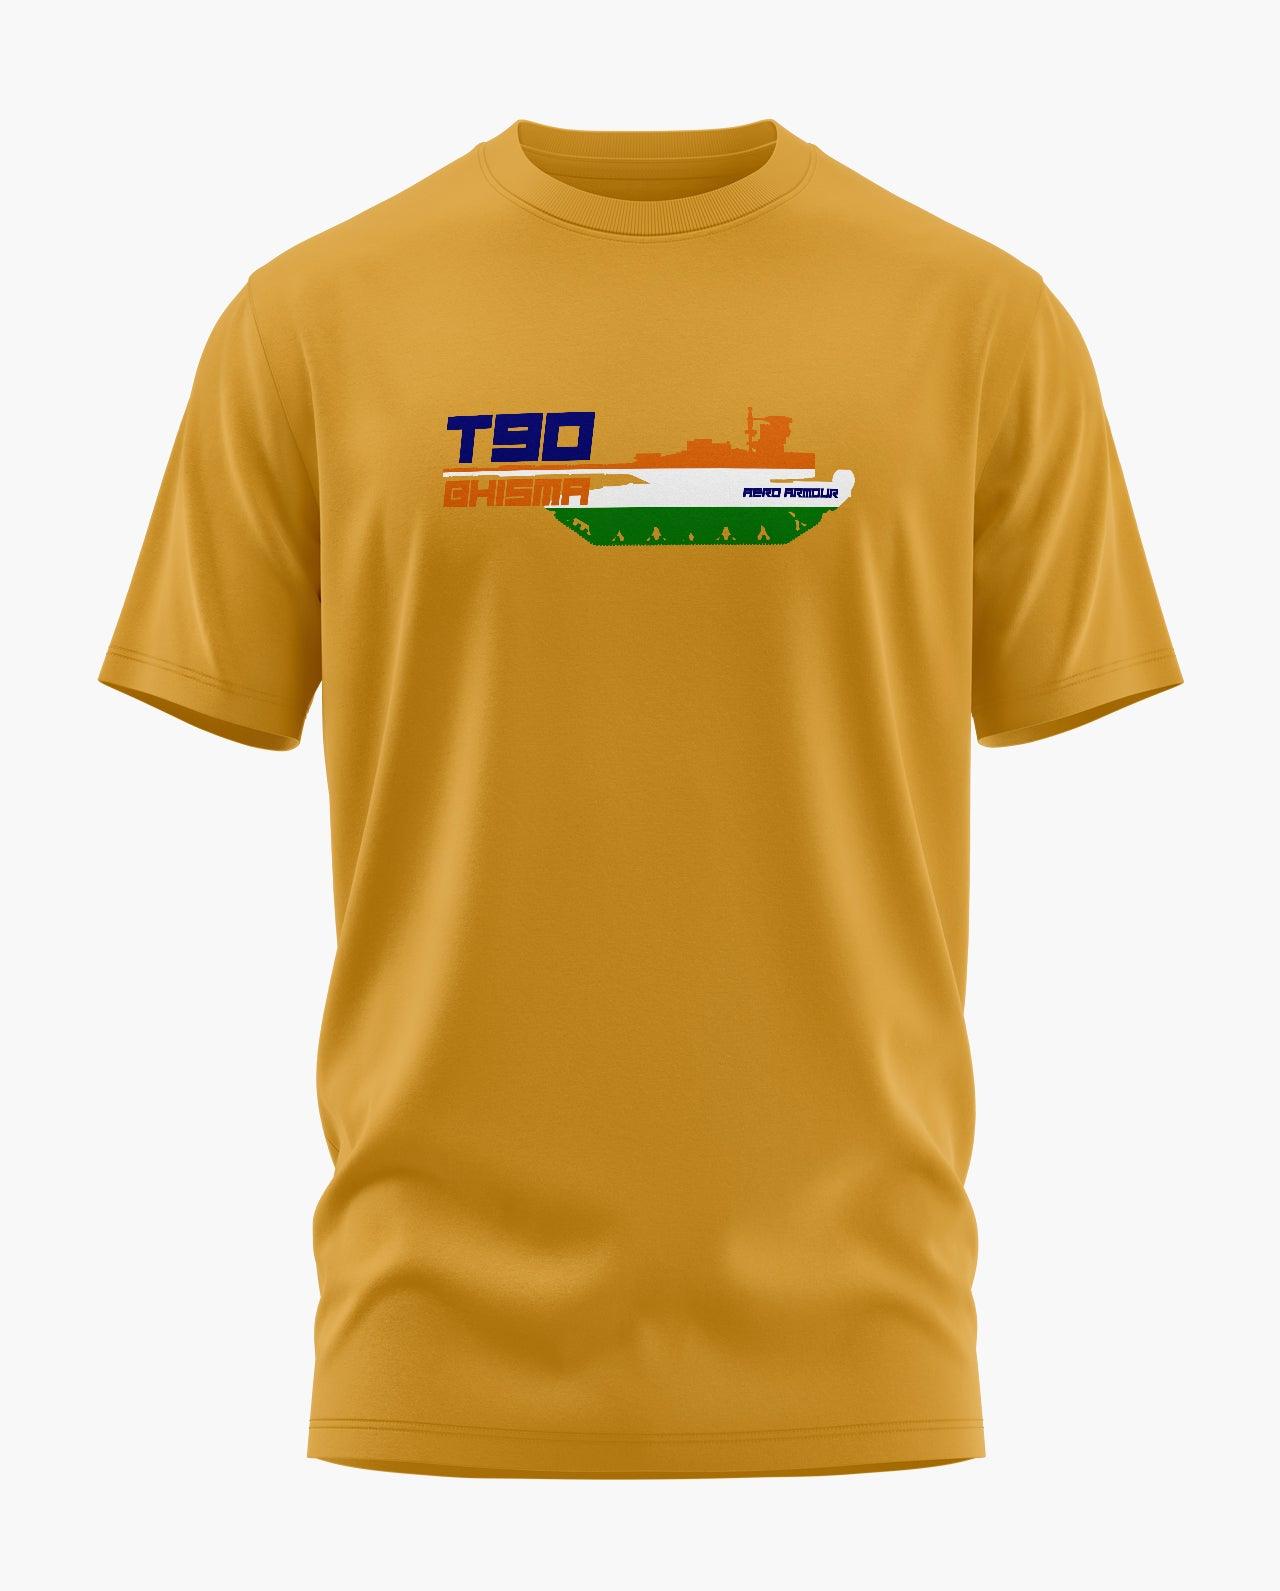 T90 Bhishma India T-Shirt - Aero Armour